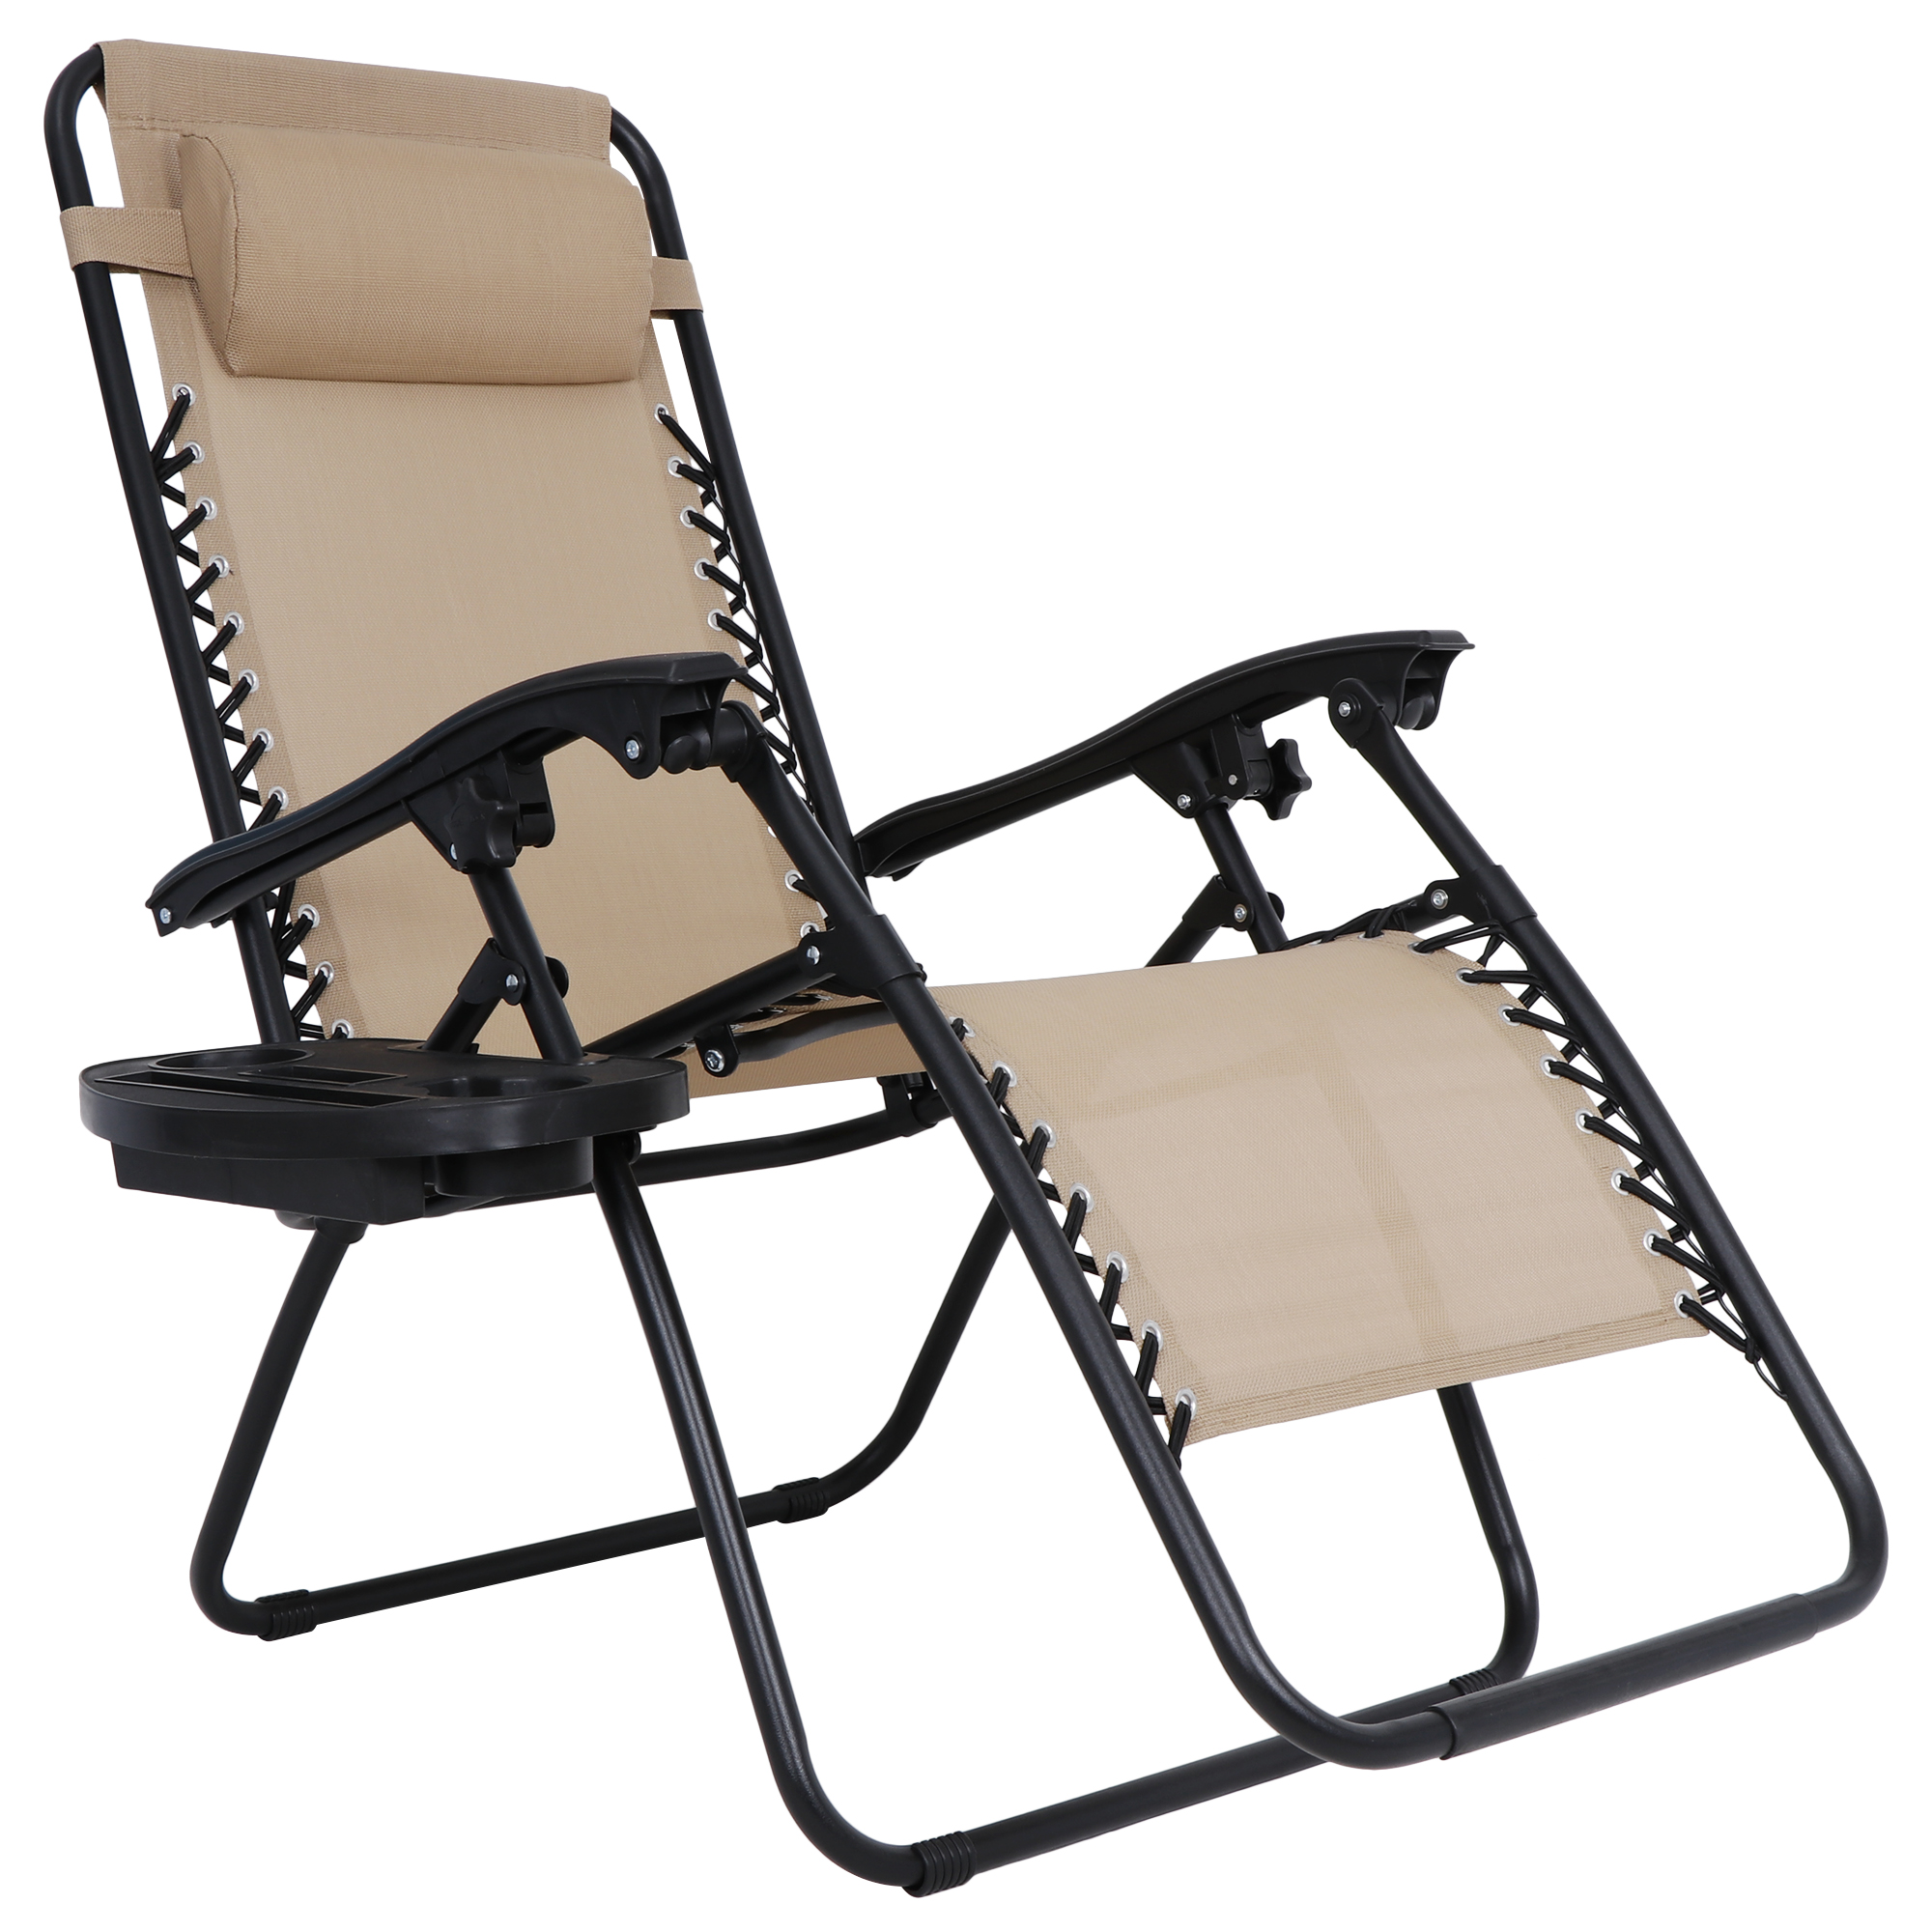 ZENSTYLE Set of 2 Adjustable Recline Chairs Zero Gravity Patio Beach Lounge 330LBS W/ Cup Holders Beige - image 2 of 9